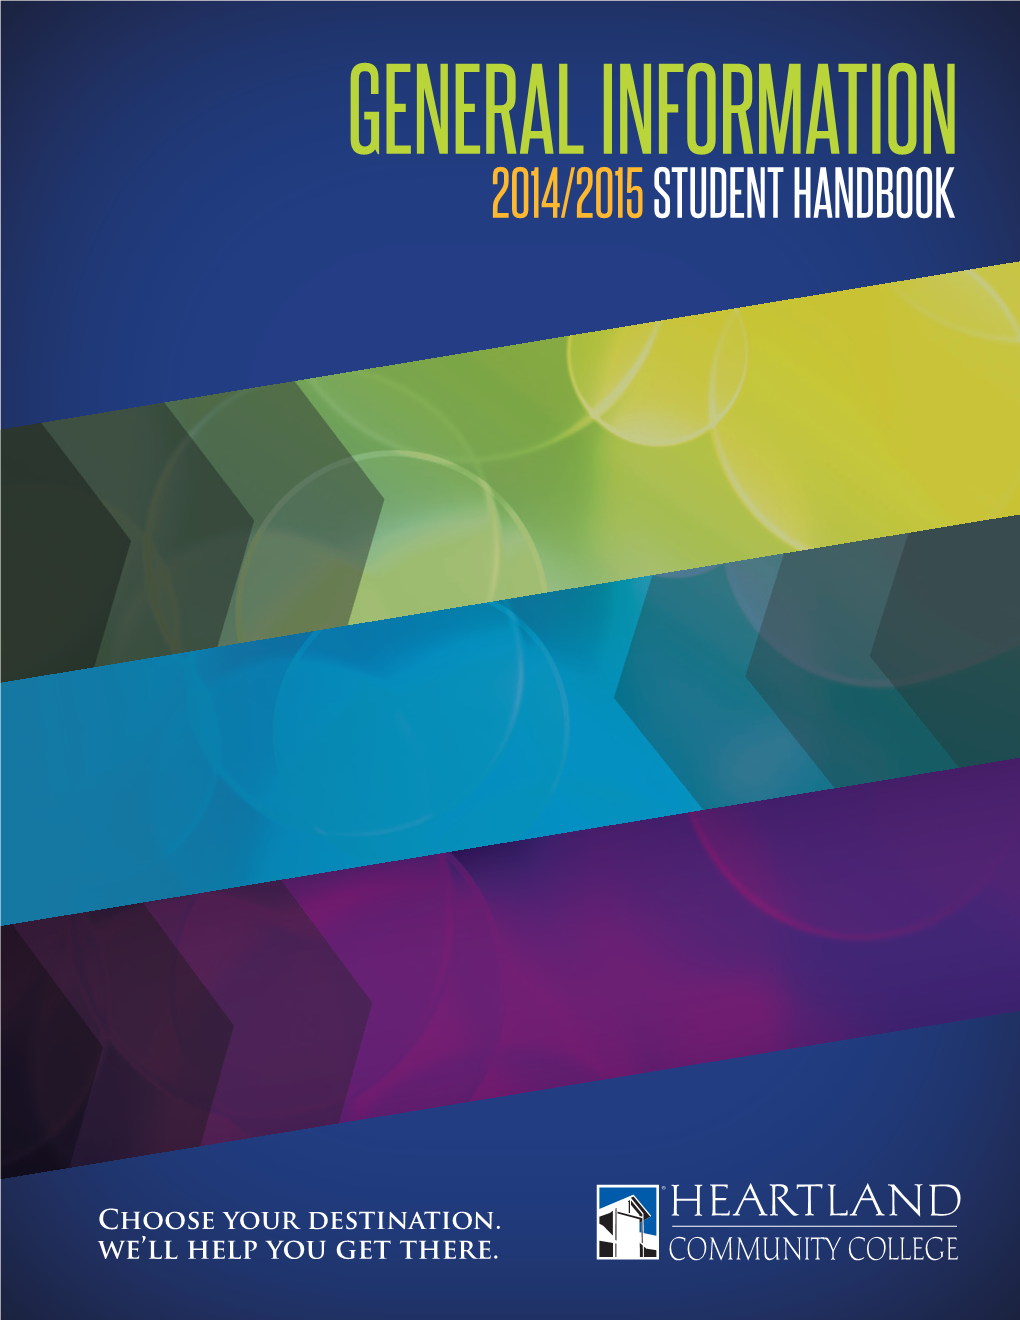 General Information 2014/2015 Student Handbook